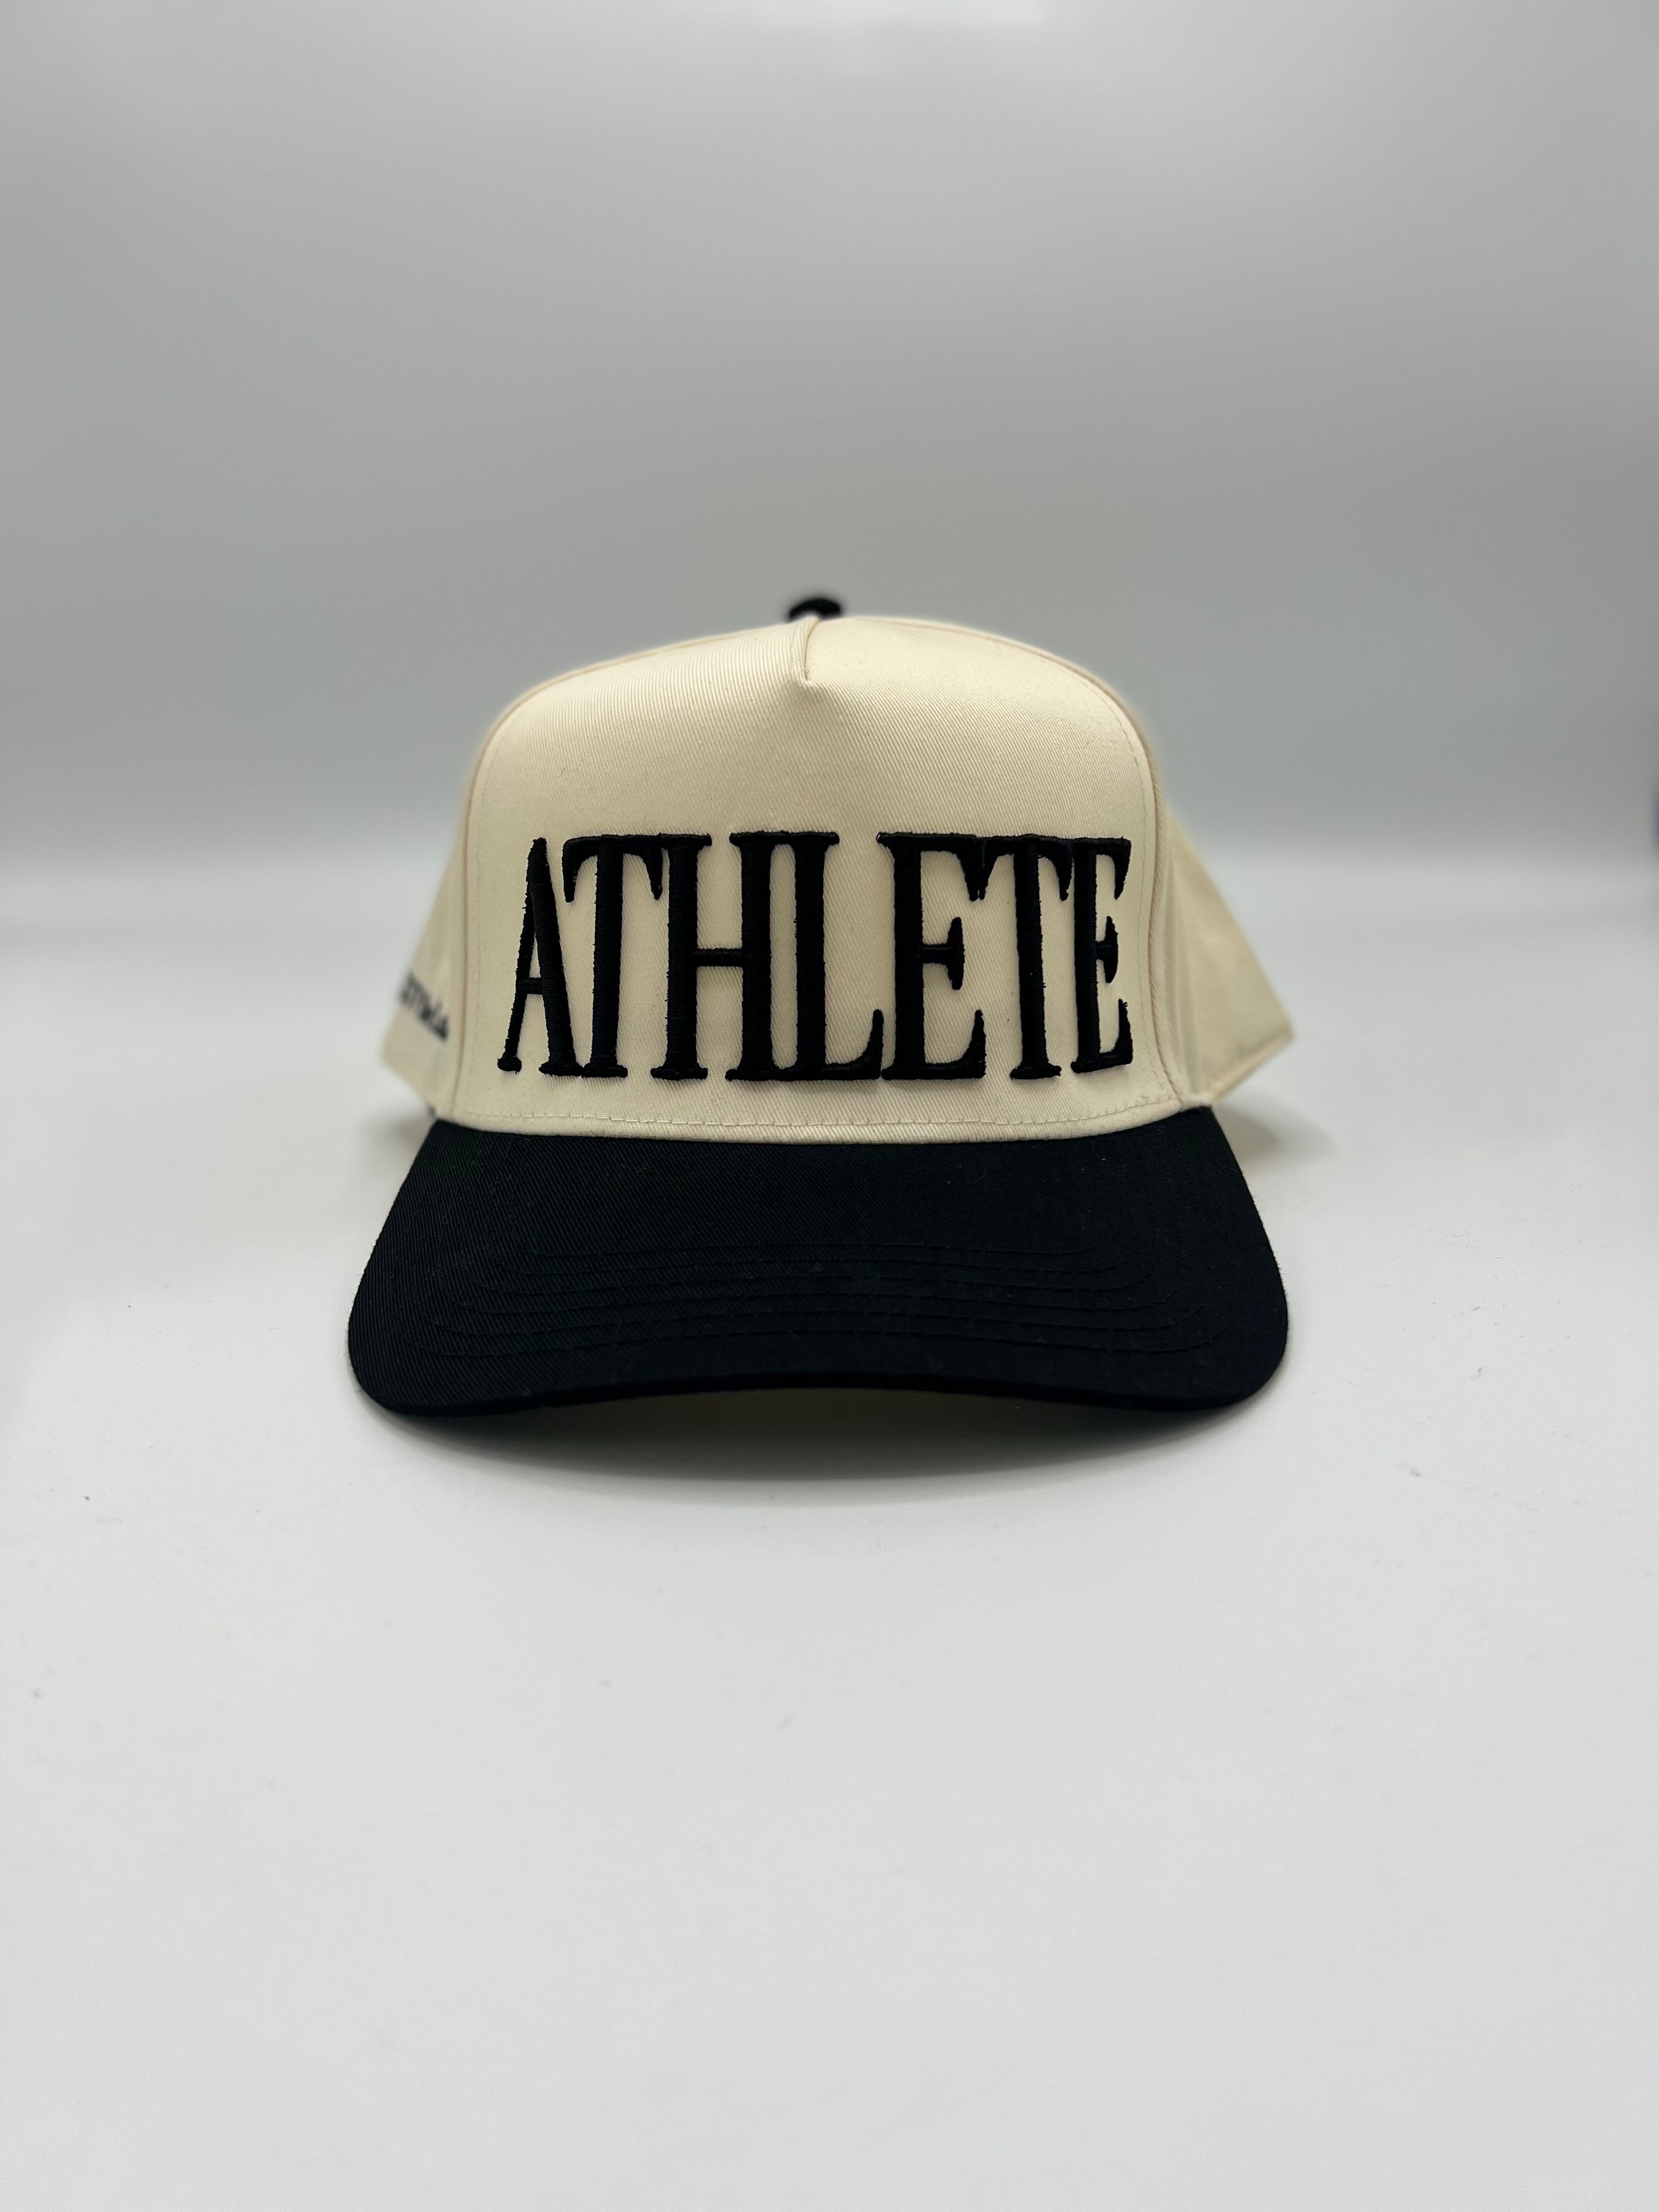 Athlete Hat